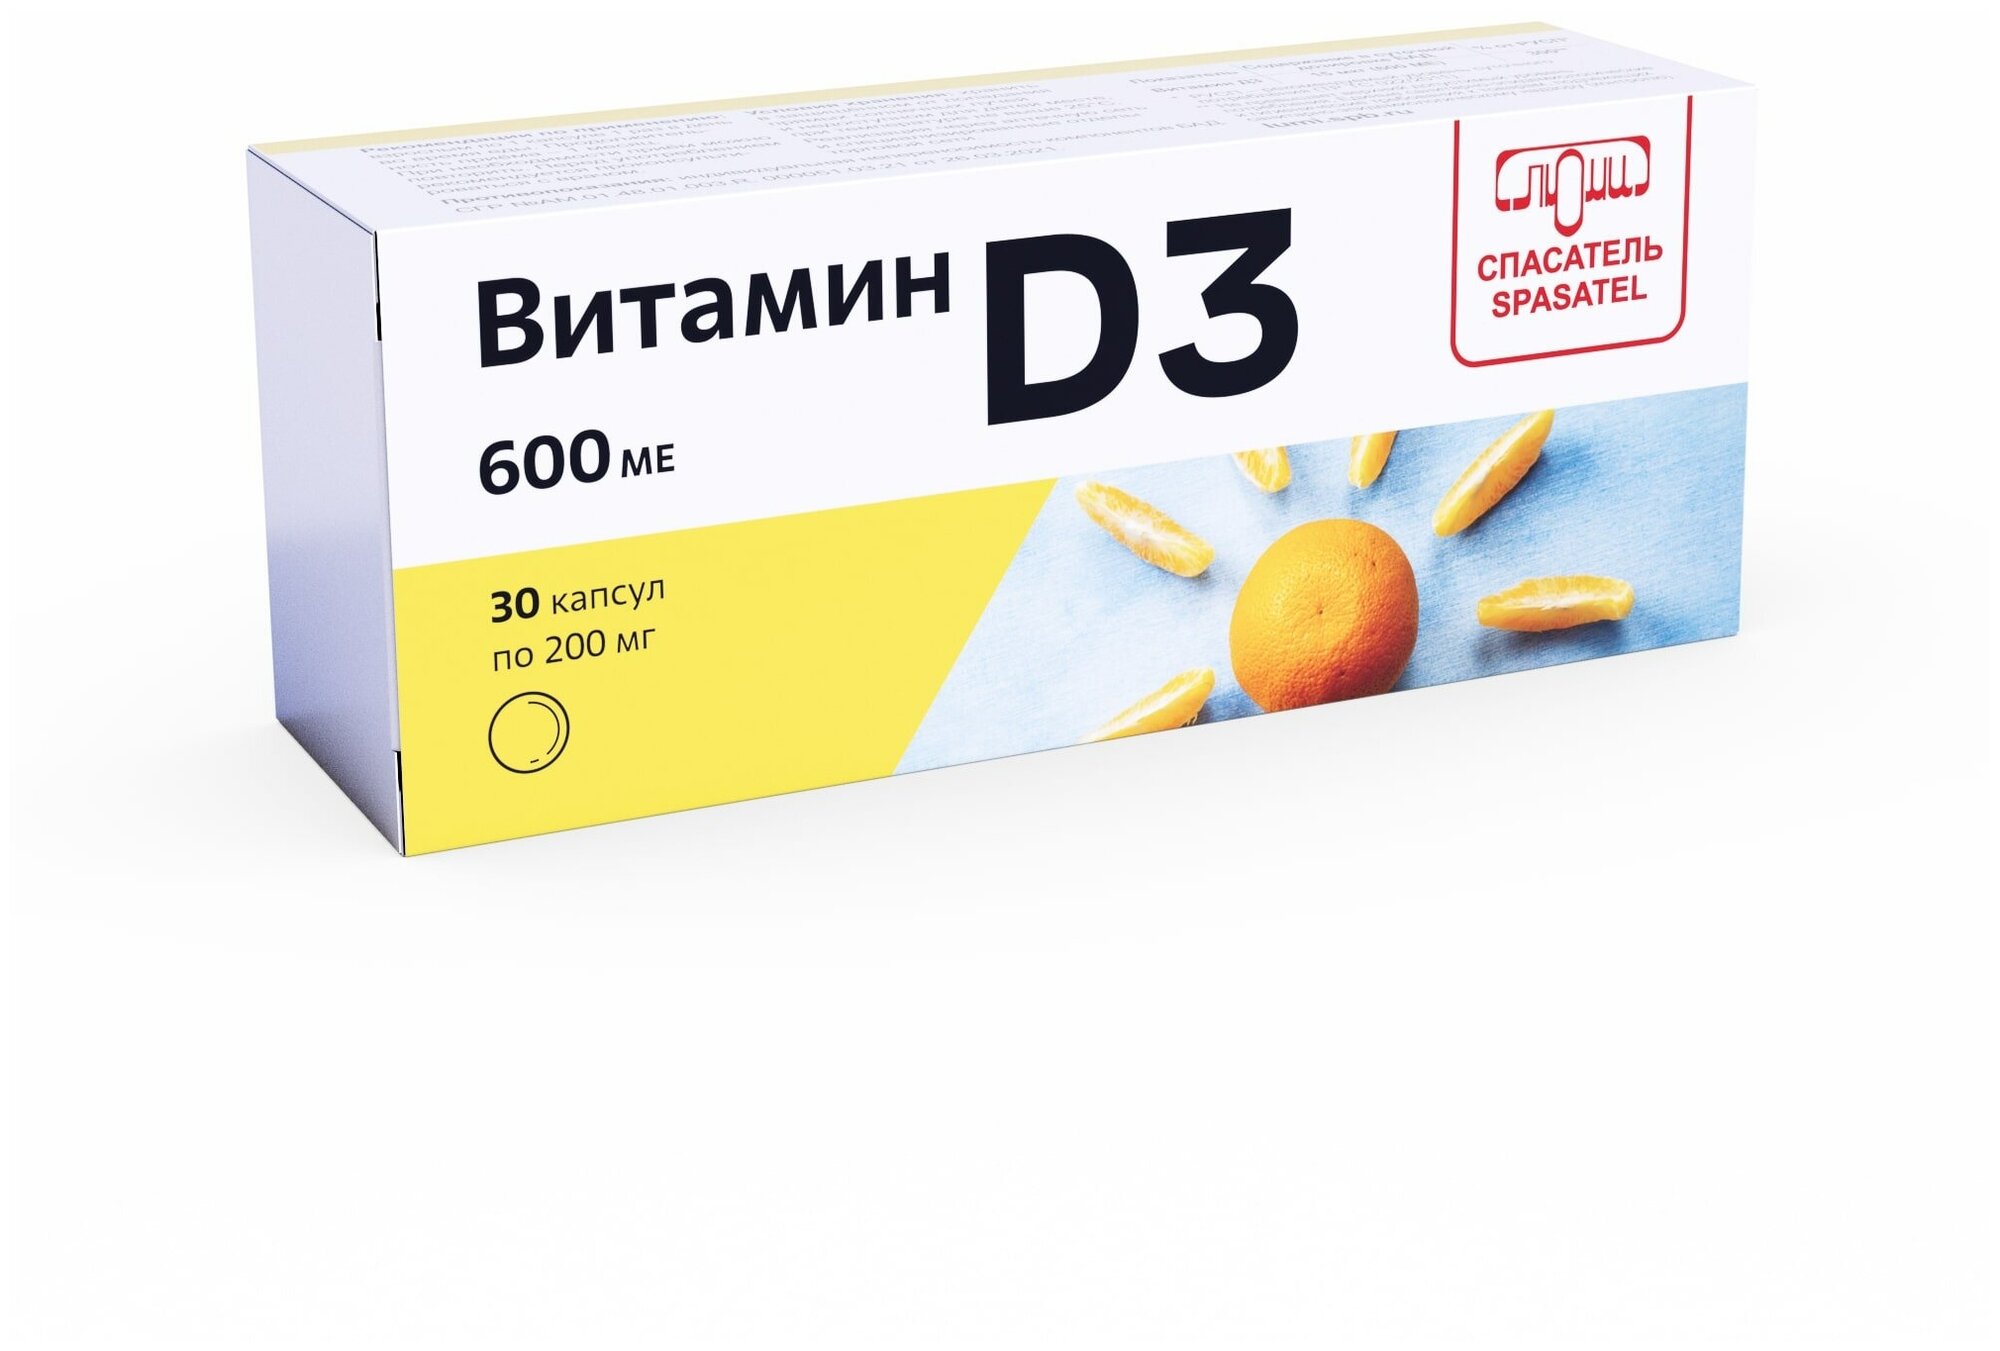 Биологически активная добавка к пище "Витамин Д3 600МЕ" (капсулы 200 мг) №30